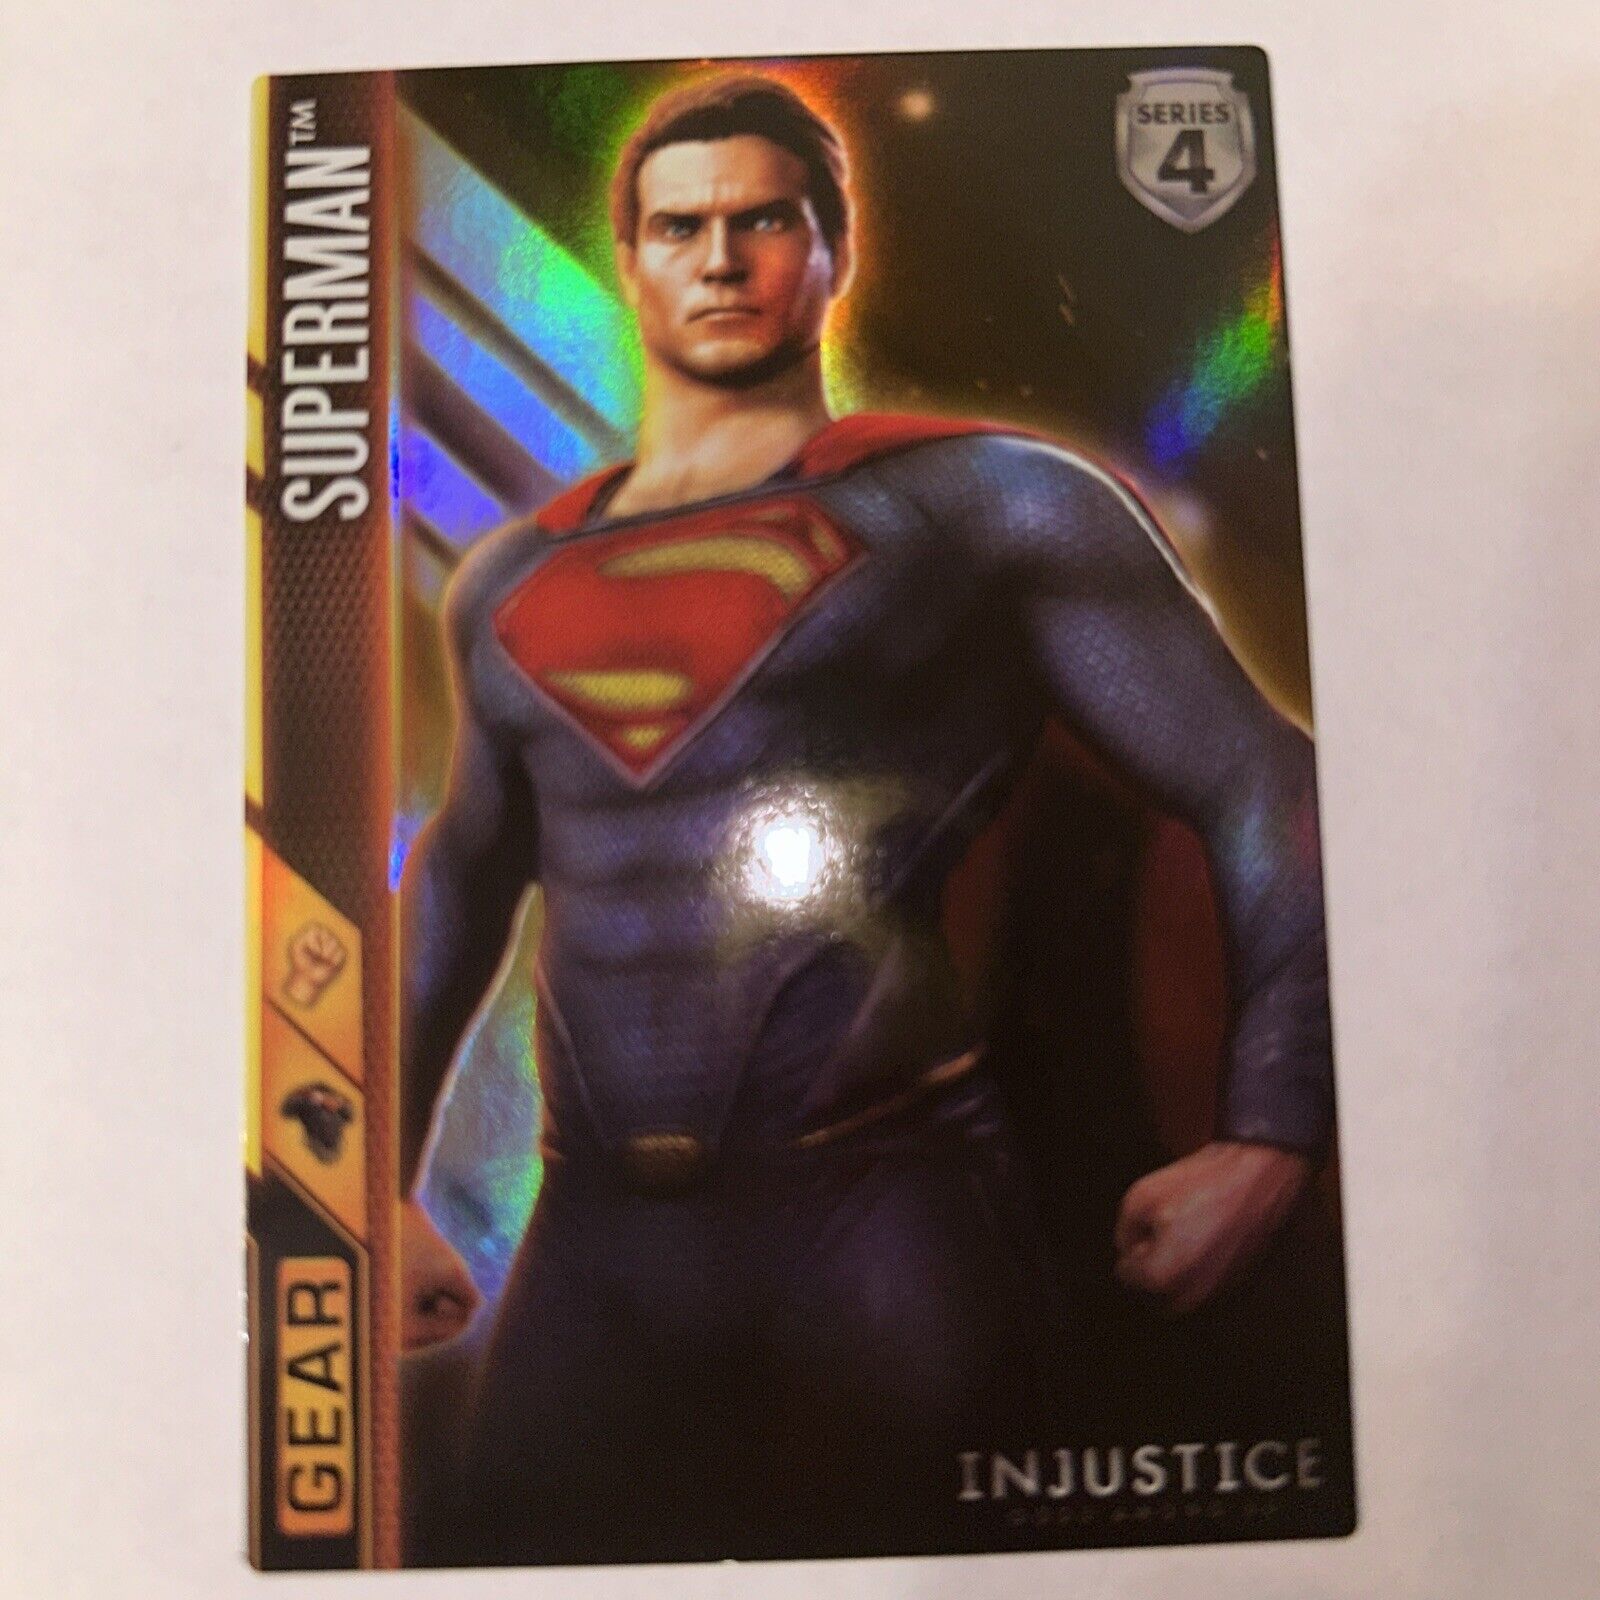 NEW DC Injustice Arcade Game Series 4, Rare FOIL - SUPERMAN GEAR Card #127